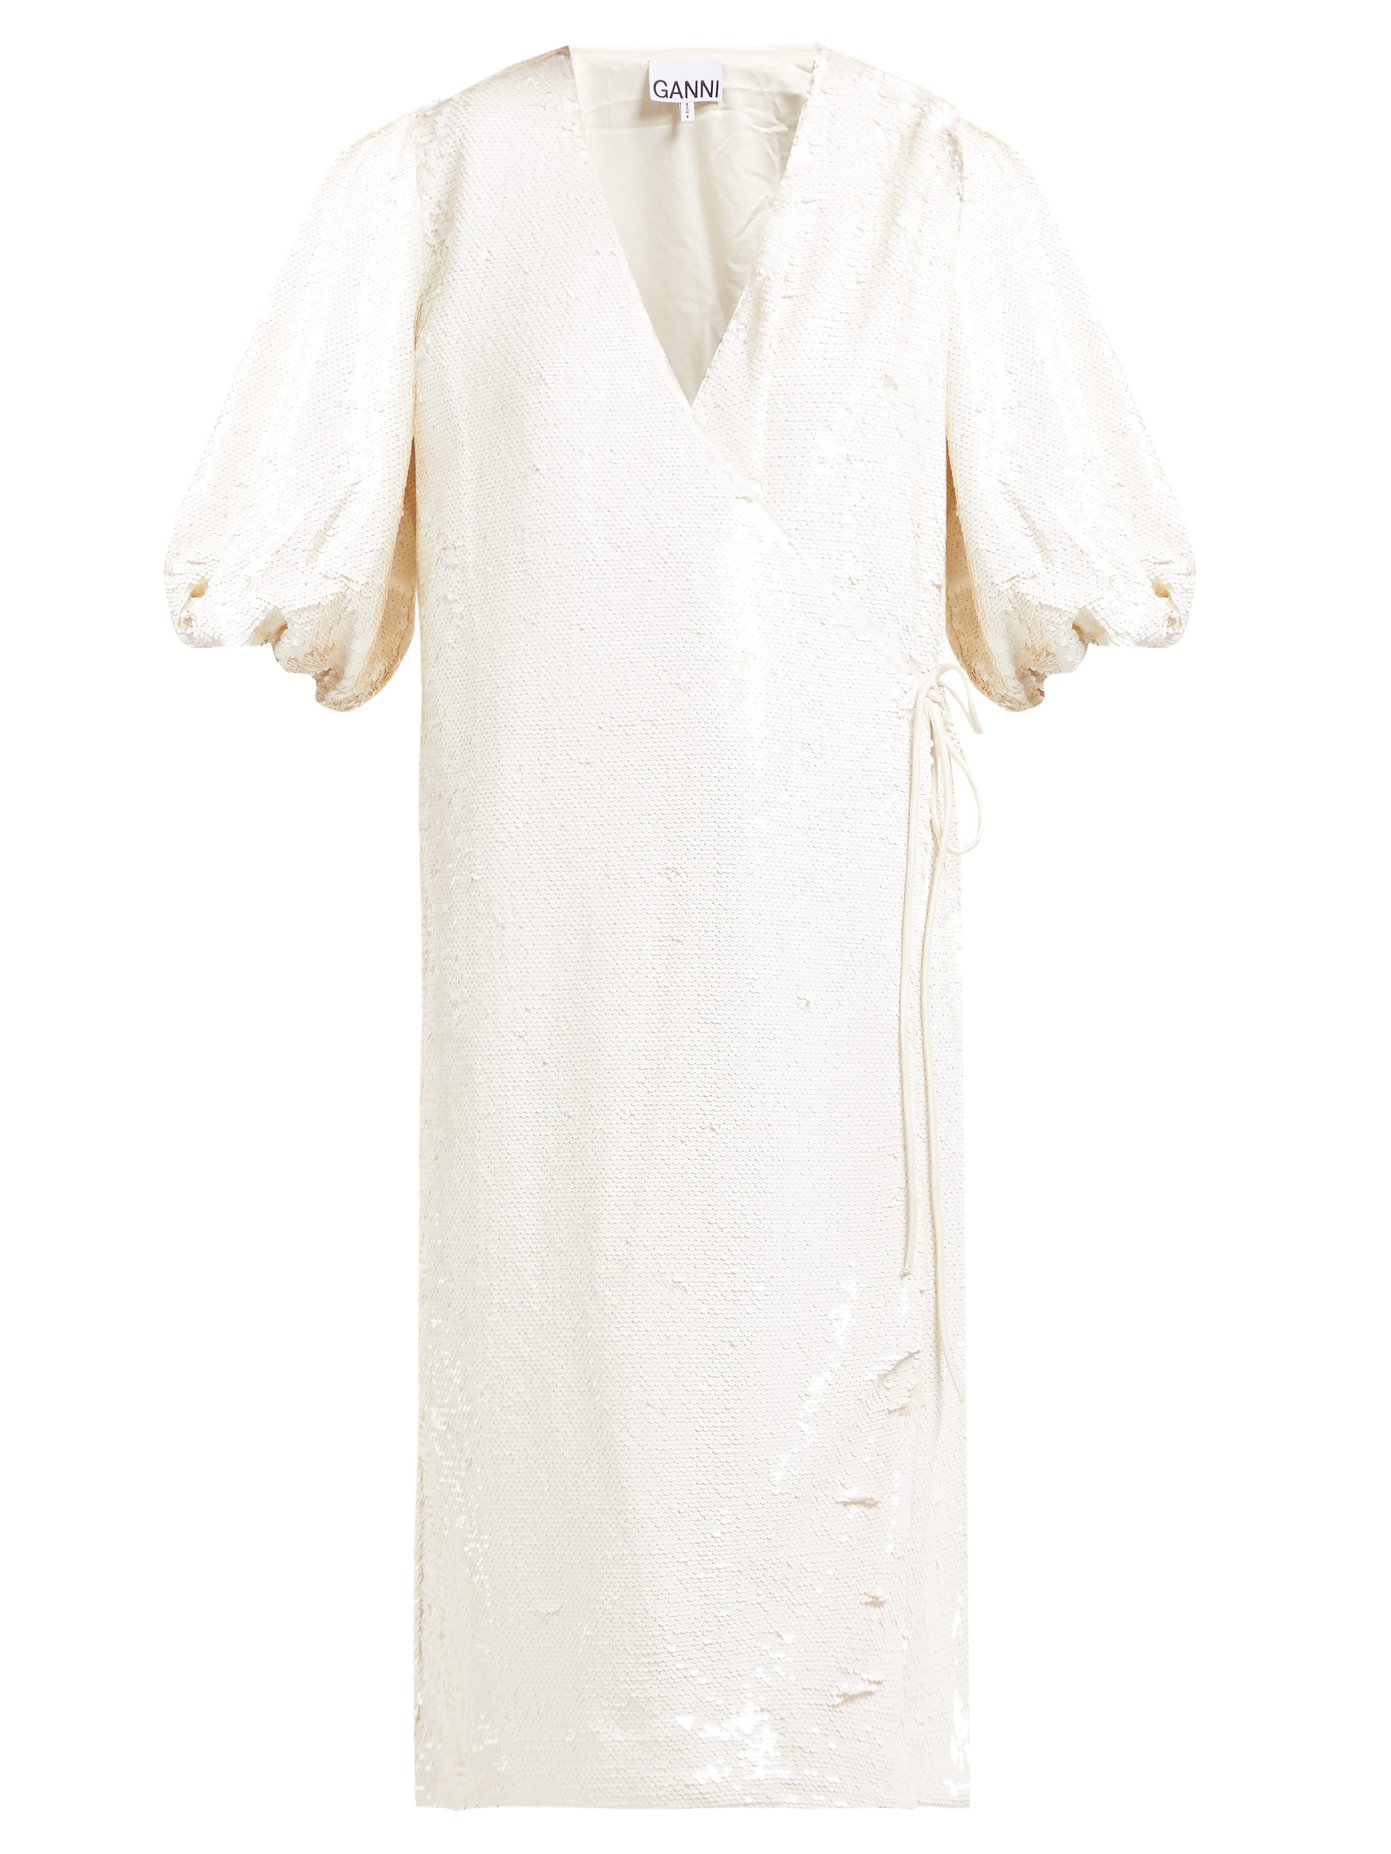 ganni white sequin dress